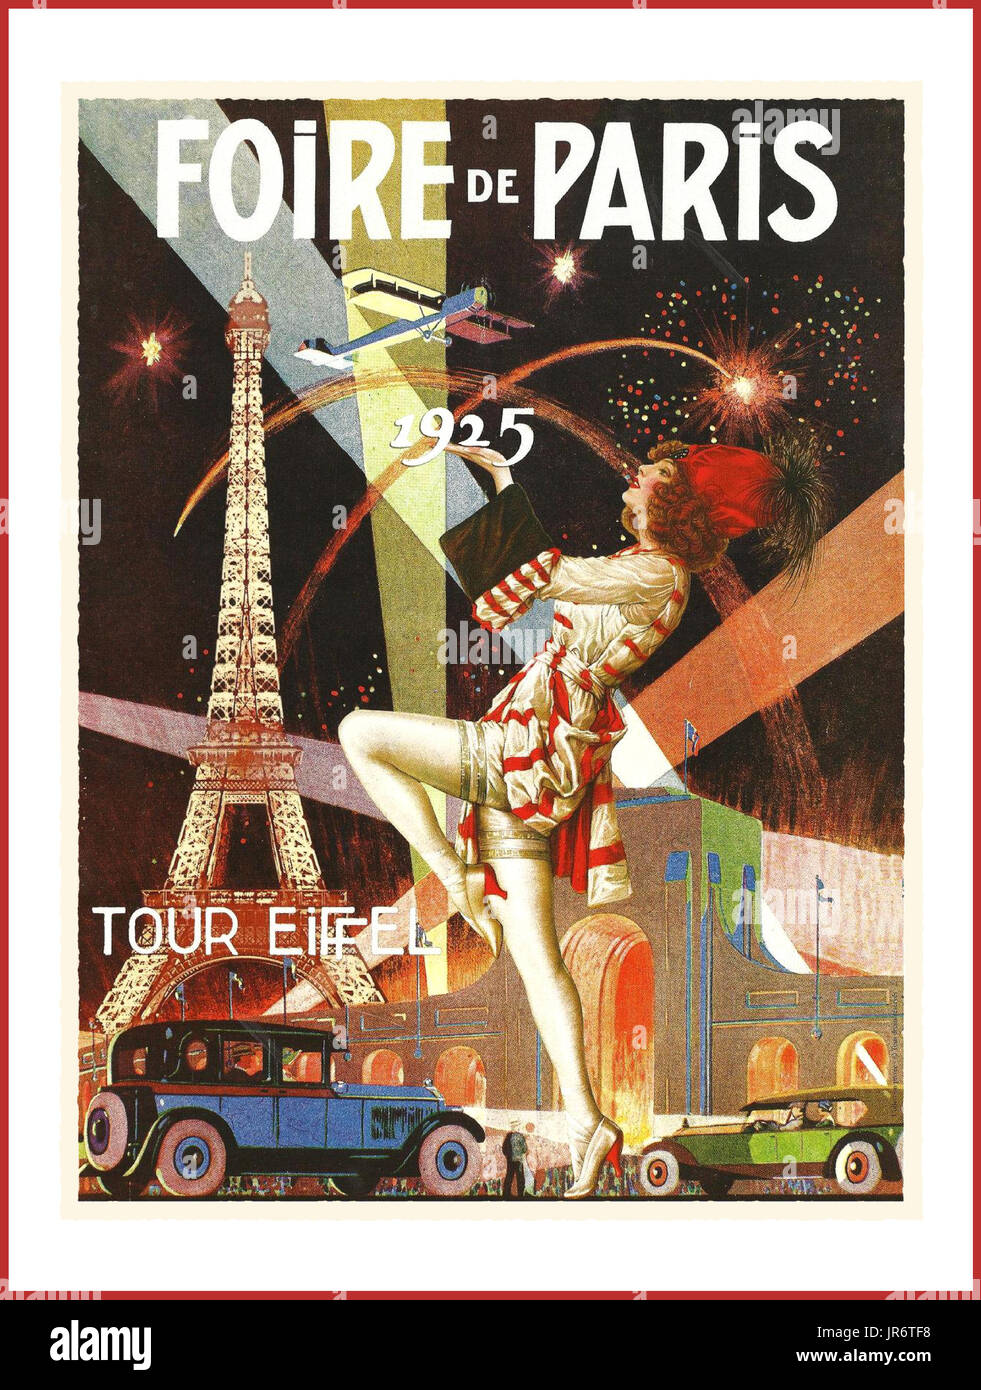 VINTAGE PARIGI POSTER francese vintage travel art deco stampa poster da 1920, la pubblicità della fiera di Parigi." Foire de Paris" 1925 Foto Stock